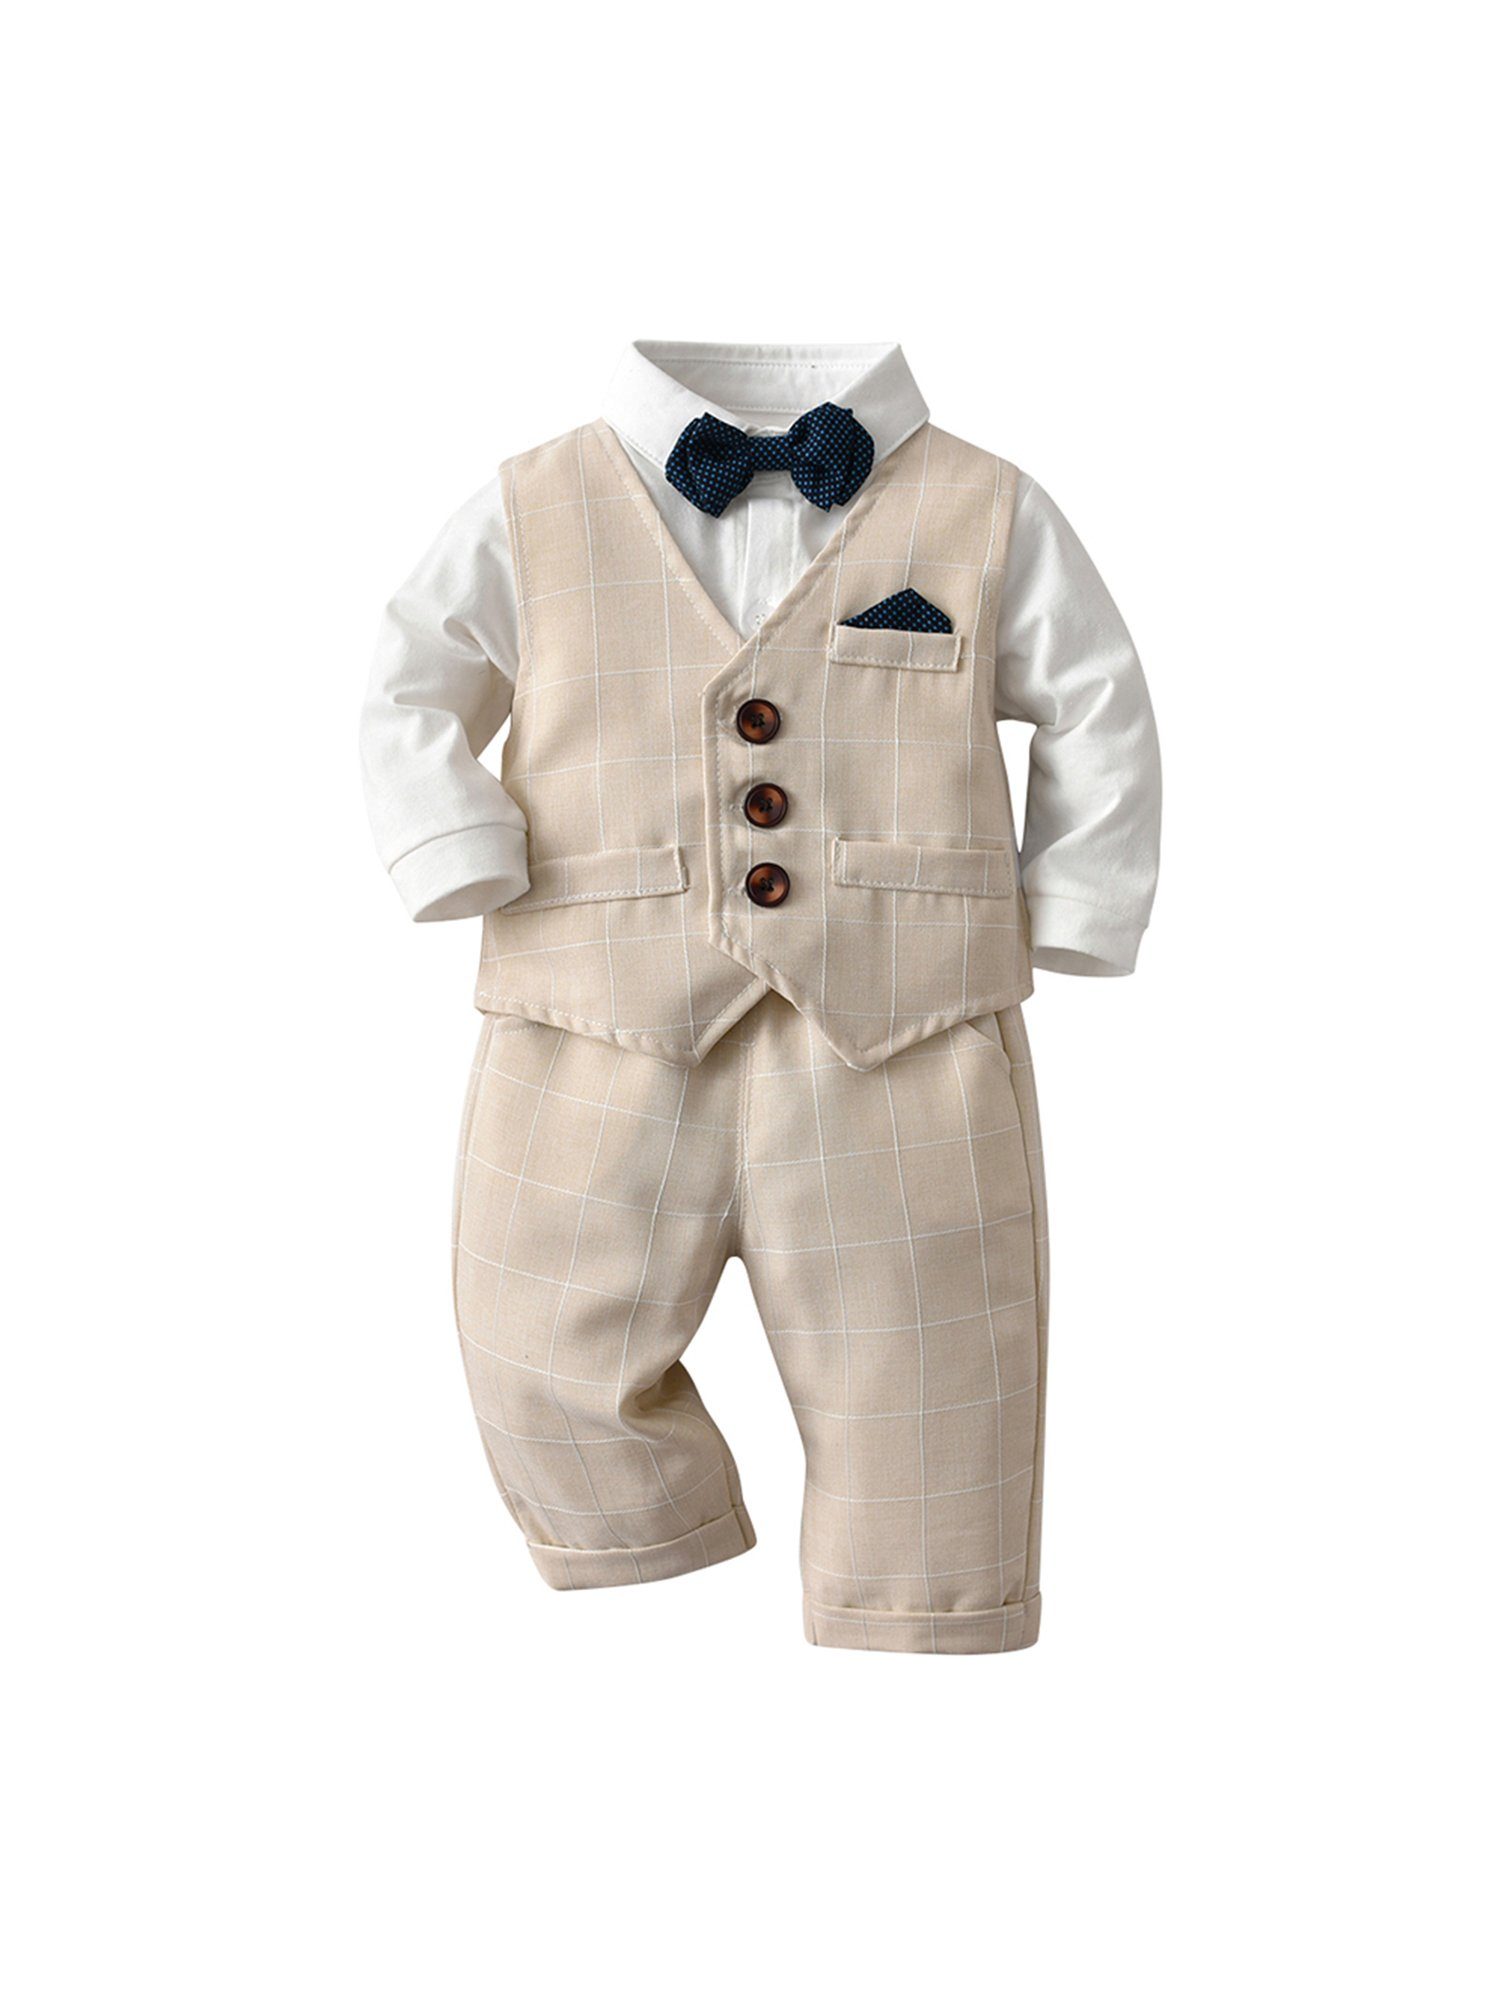 Lapastyle Jungen dreiteiliges Anzug Baby Langarm-Shirt, Hose, Set Khaki Weste,